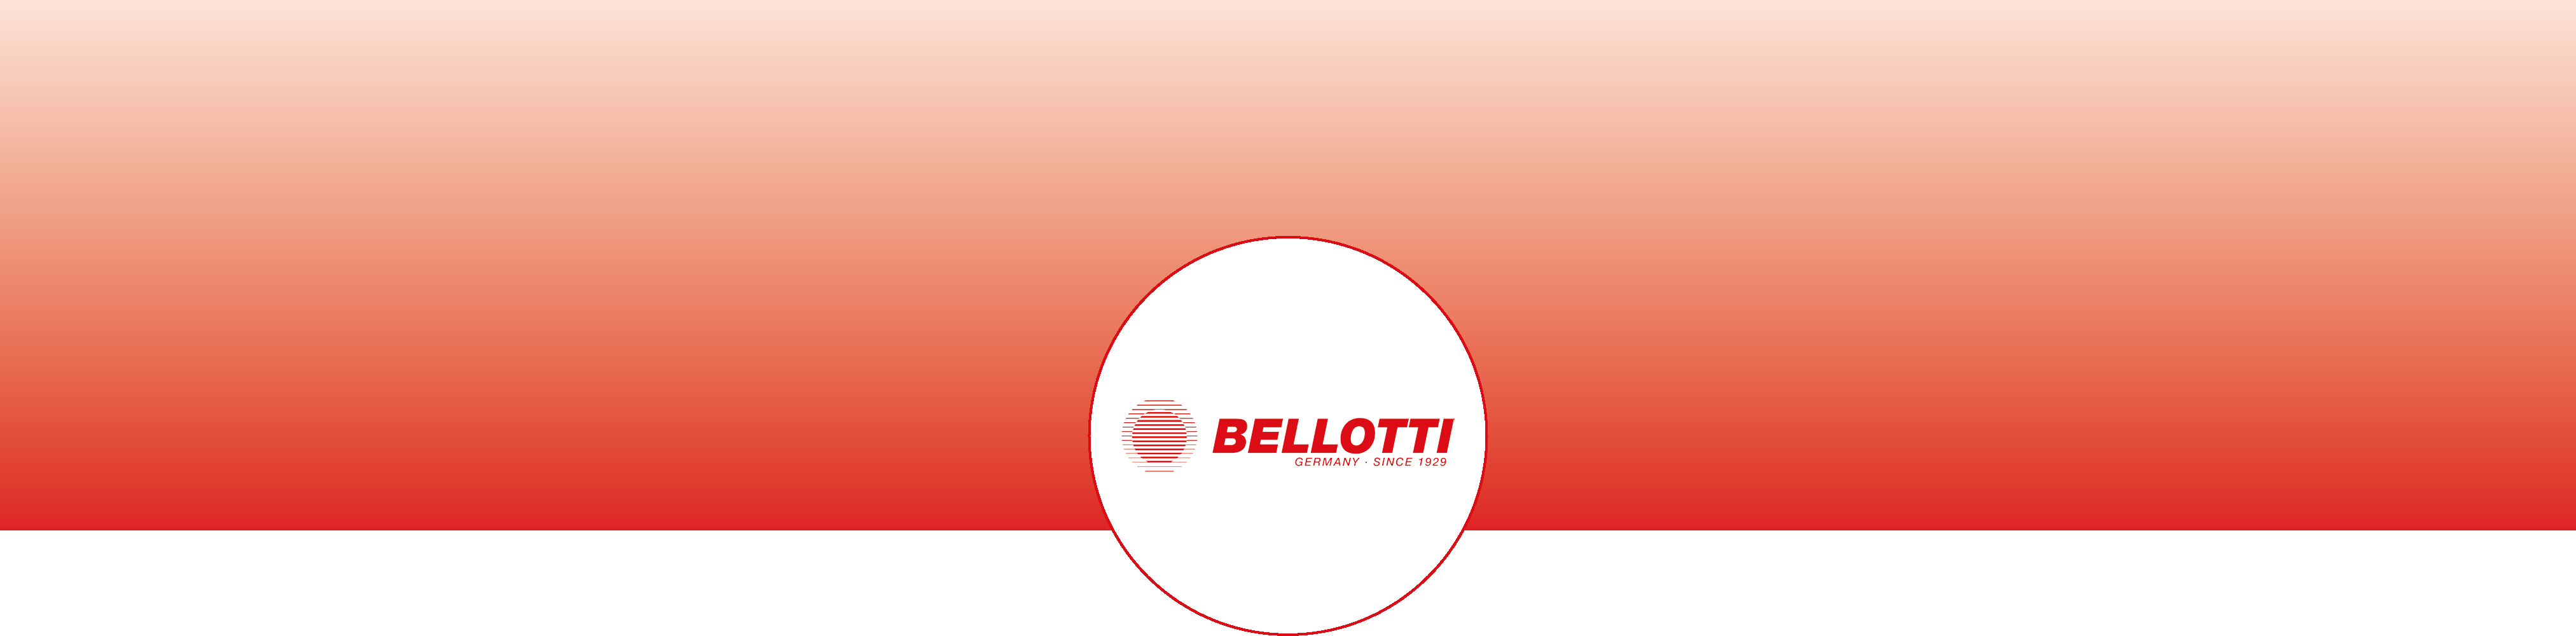 banner_bellotti